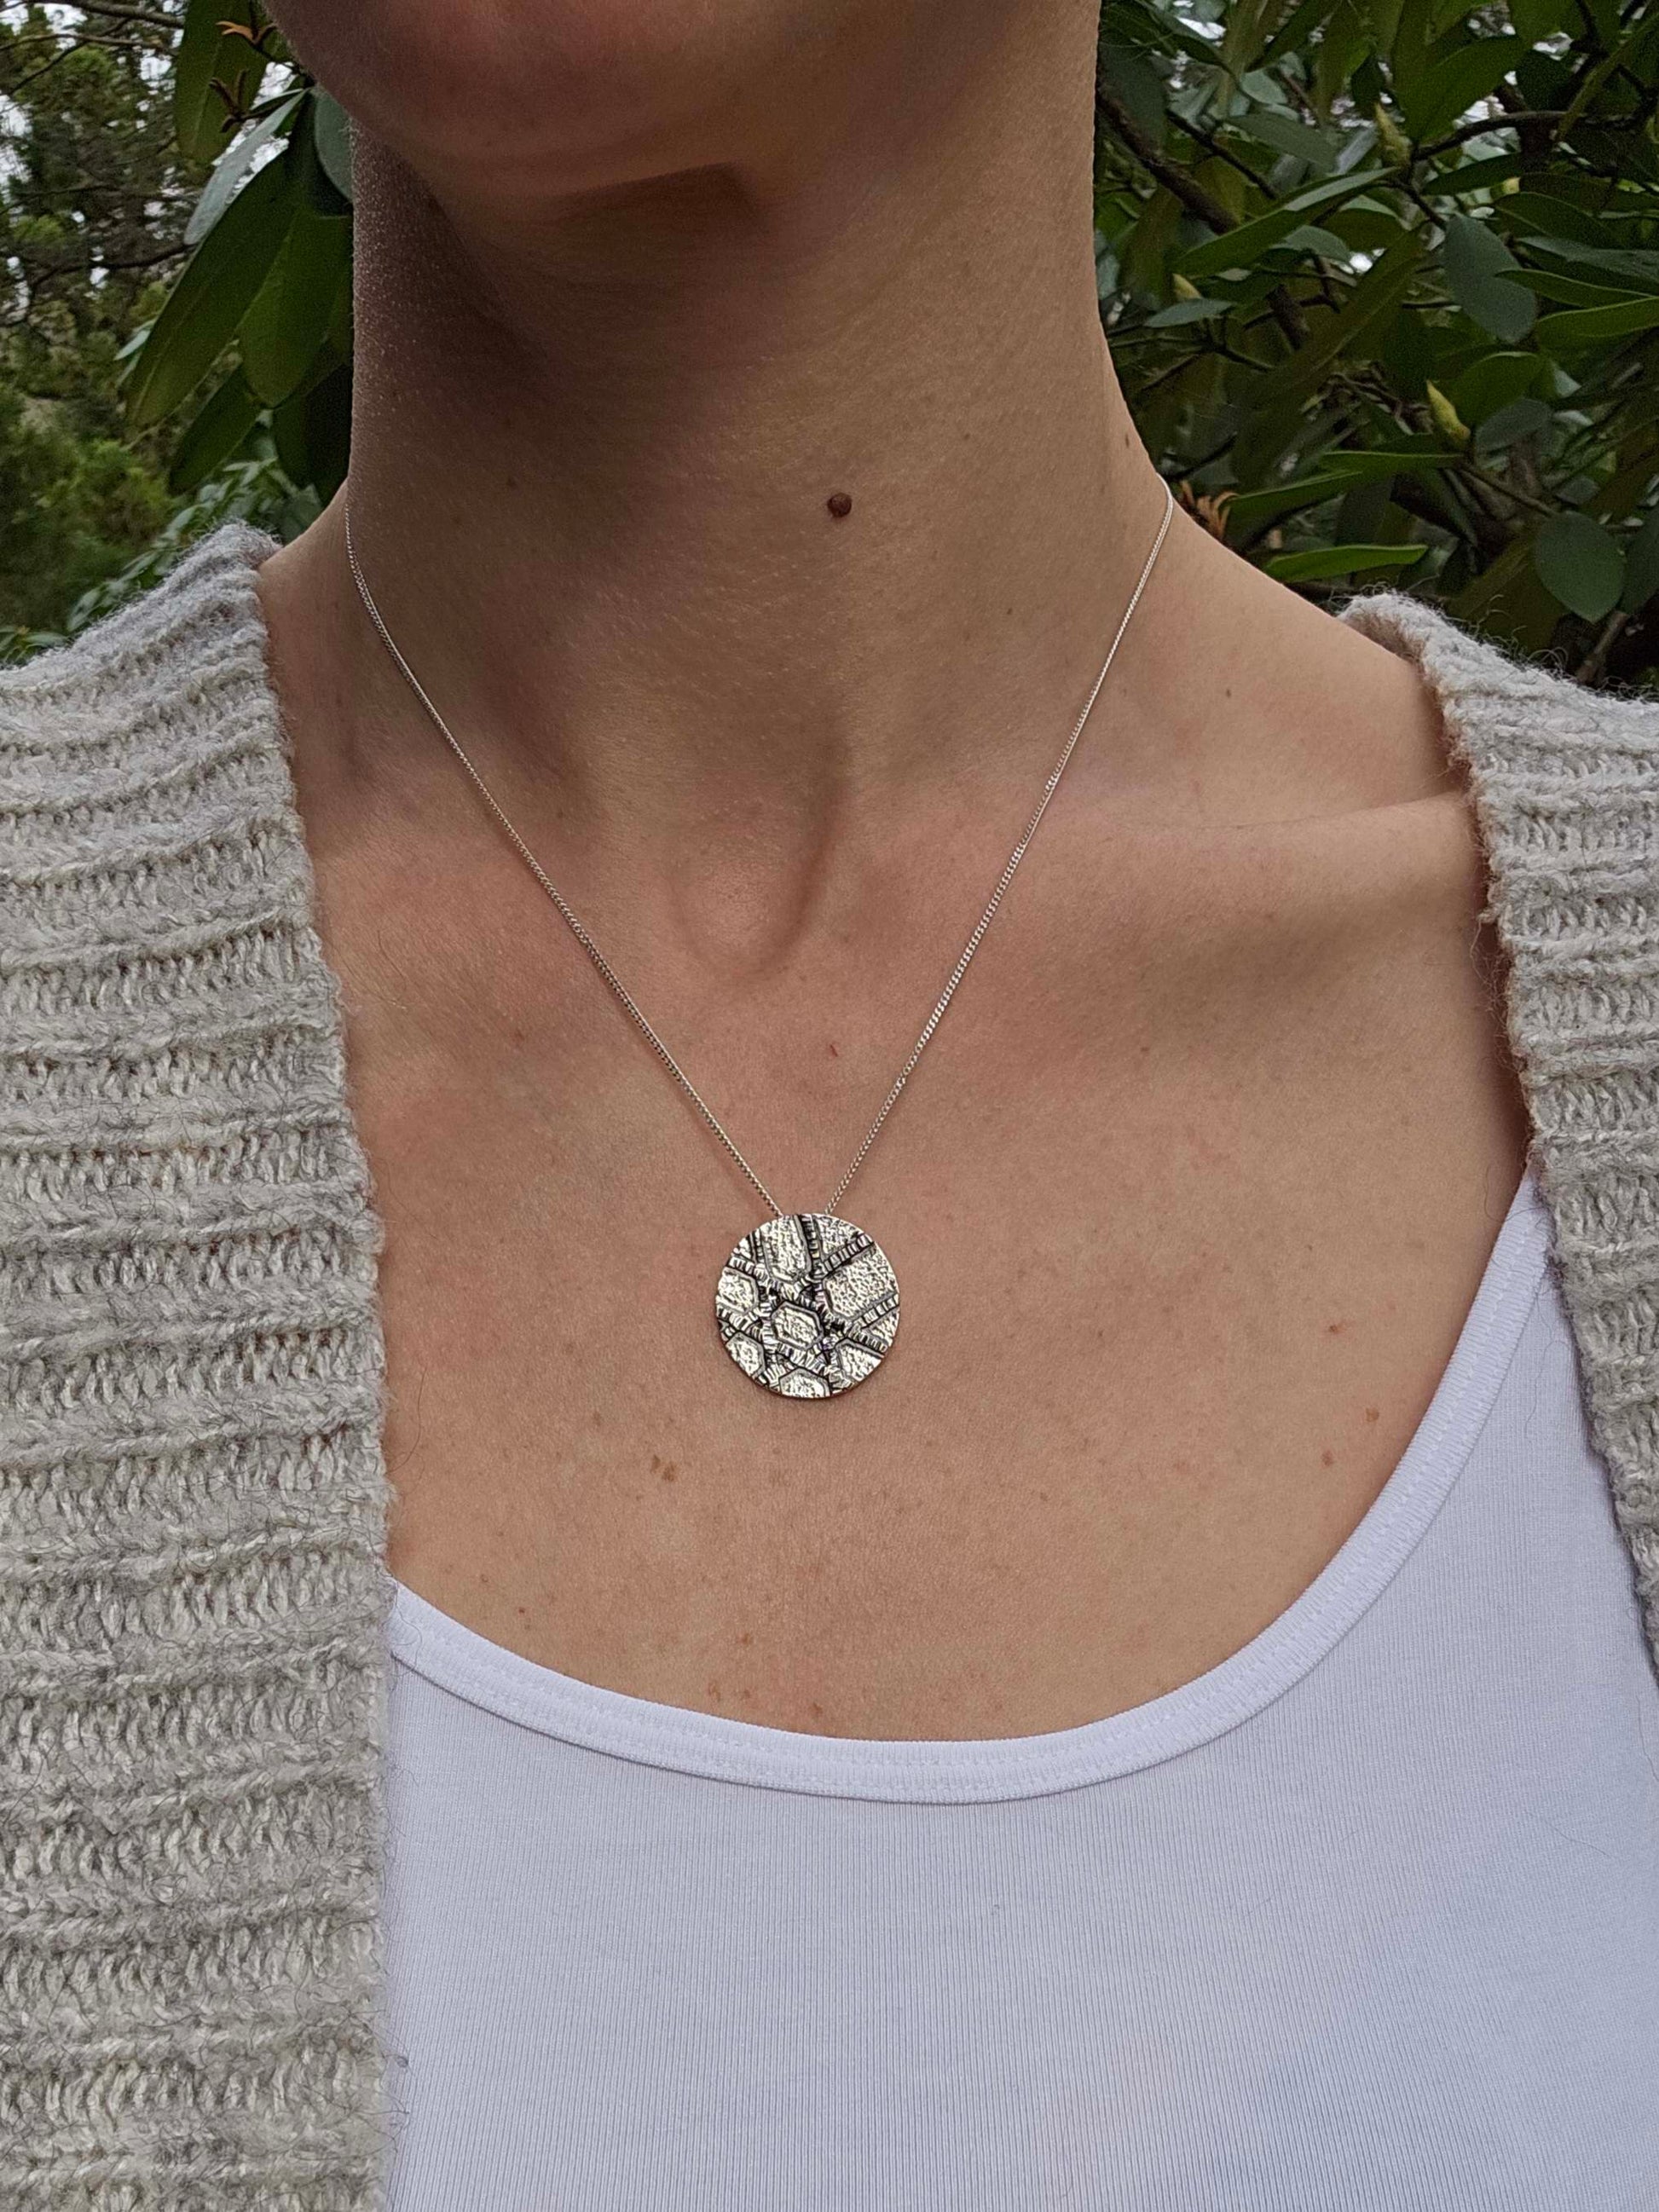 Unique Sterling Silver Jewish Star necklace 